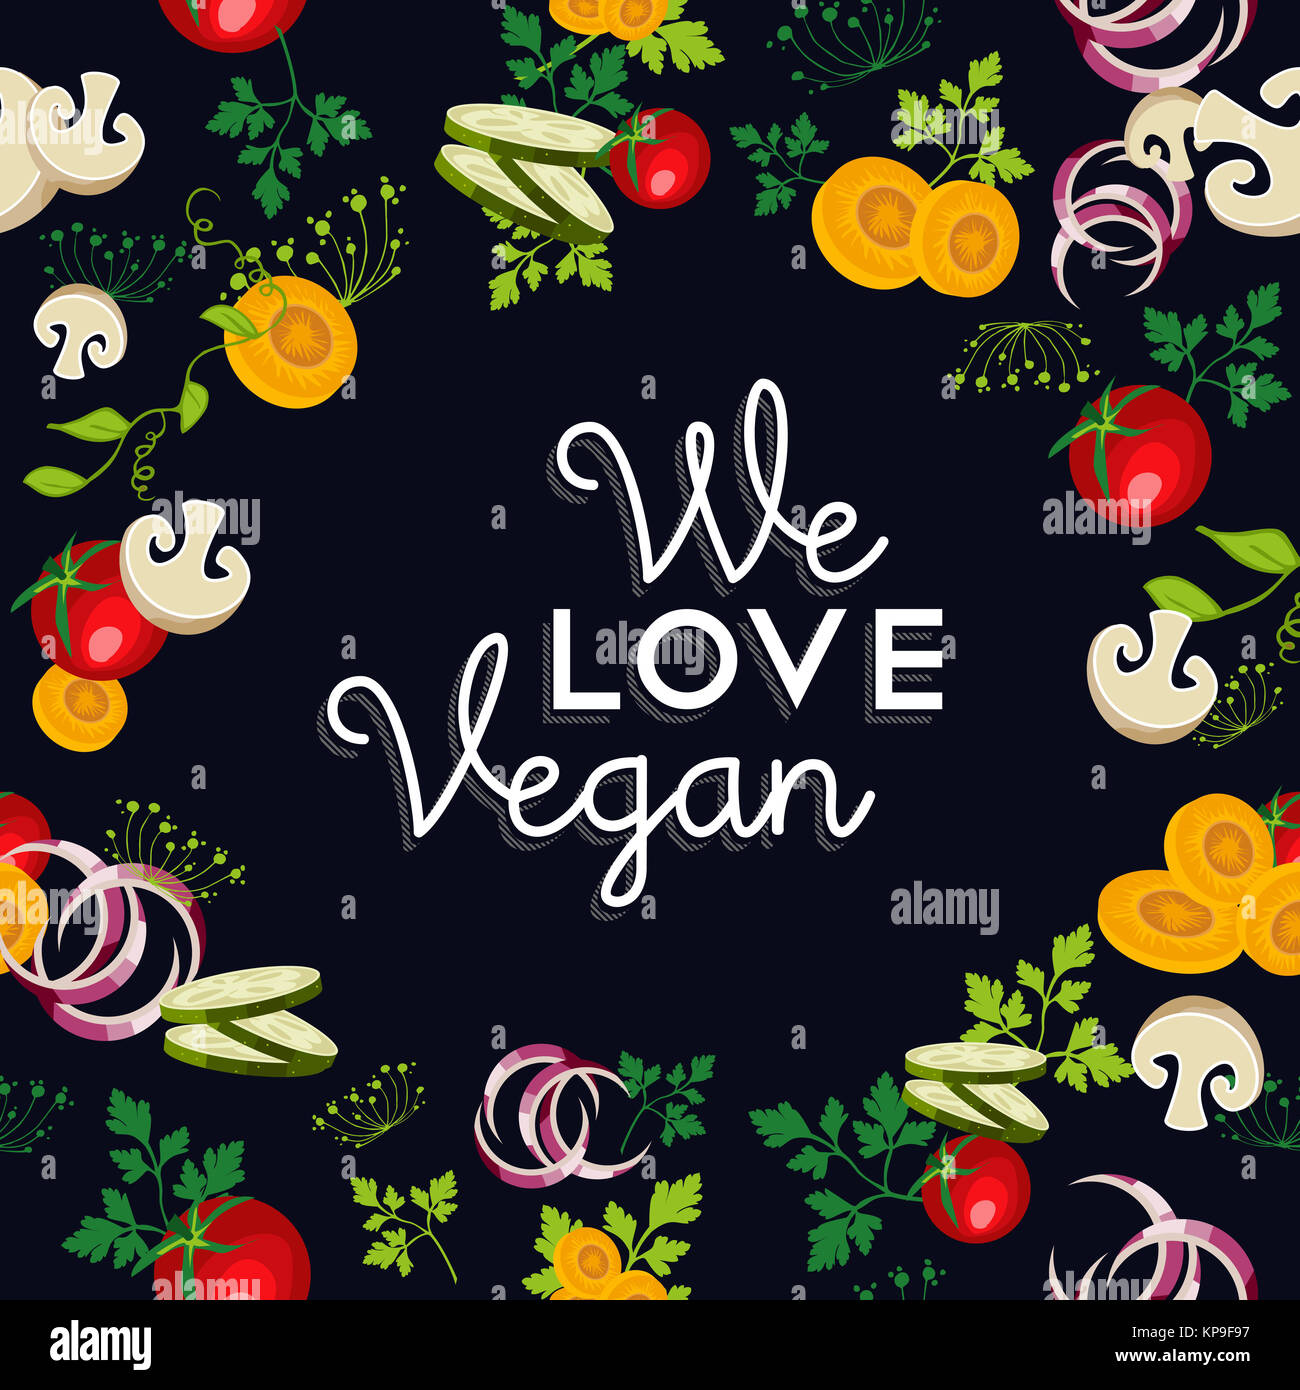 We love vegan food design with vegetables Stock Photo